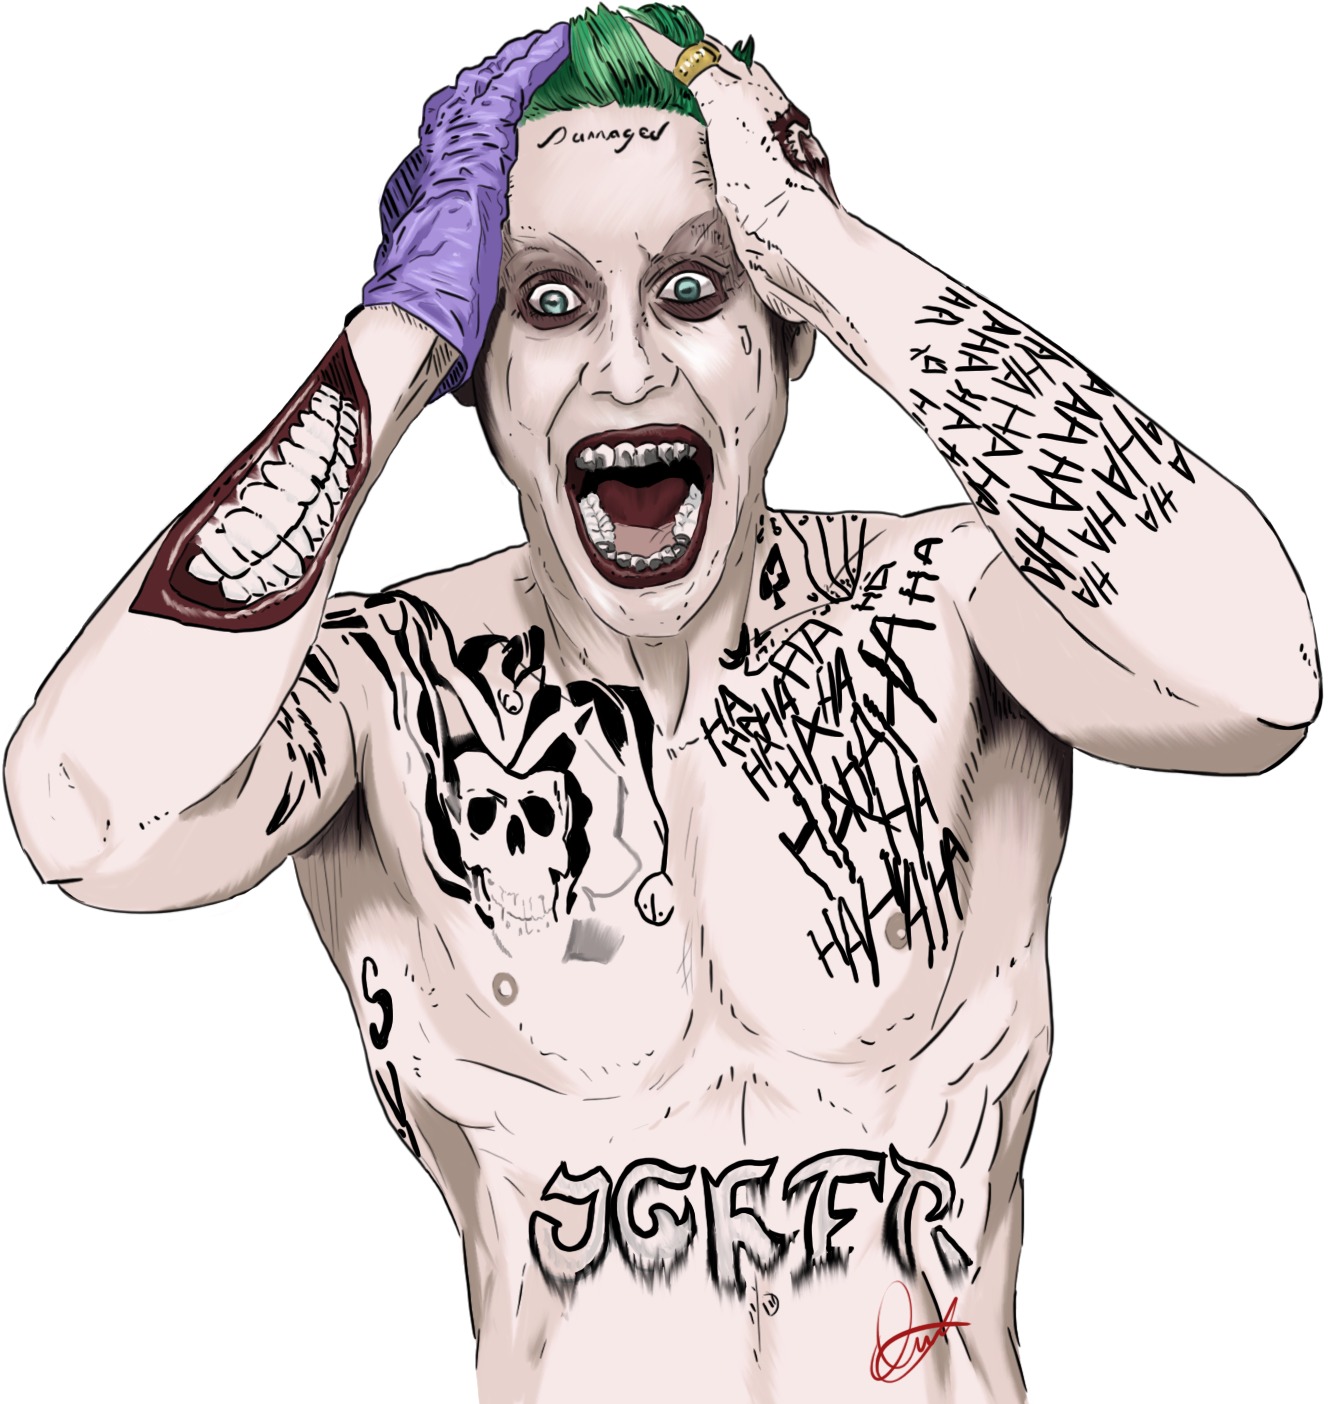 Download PNG image - Clown Joker PNG Image 